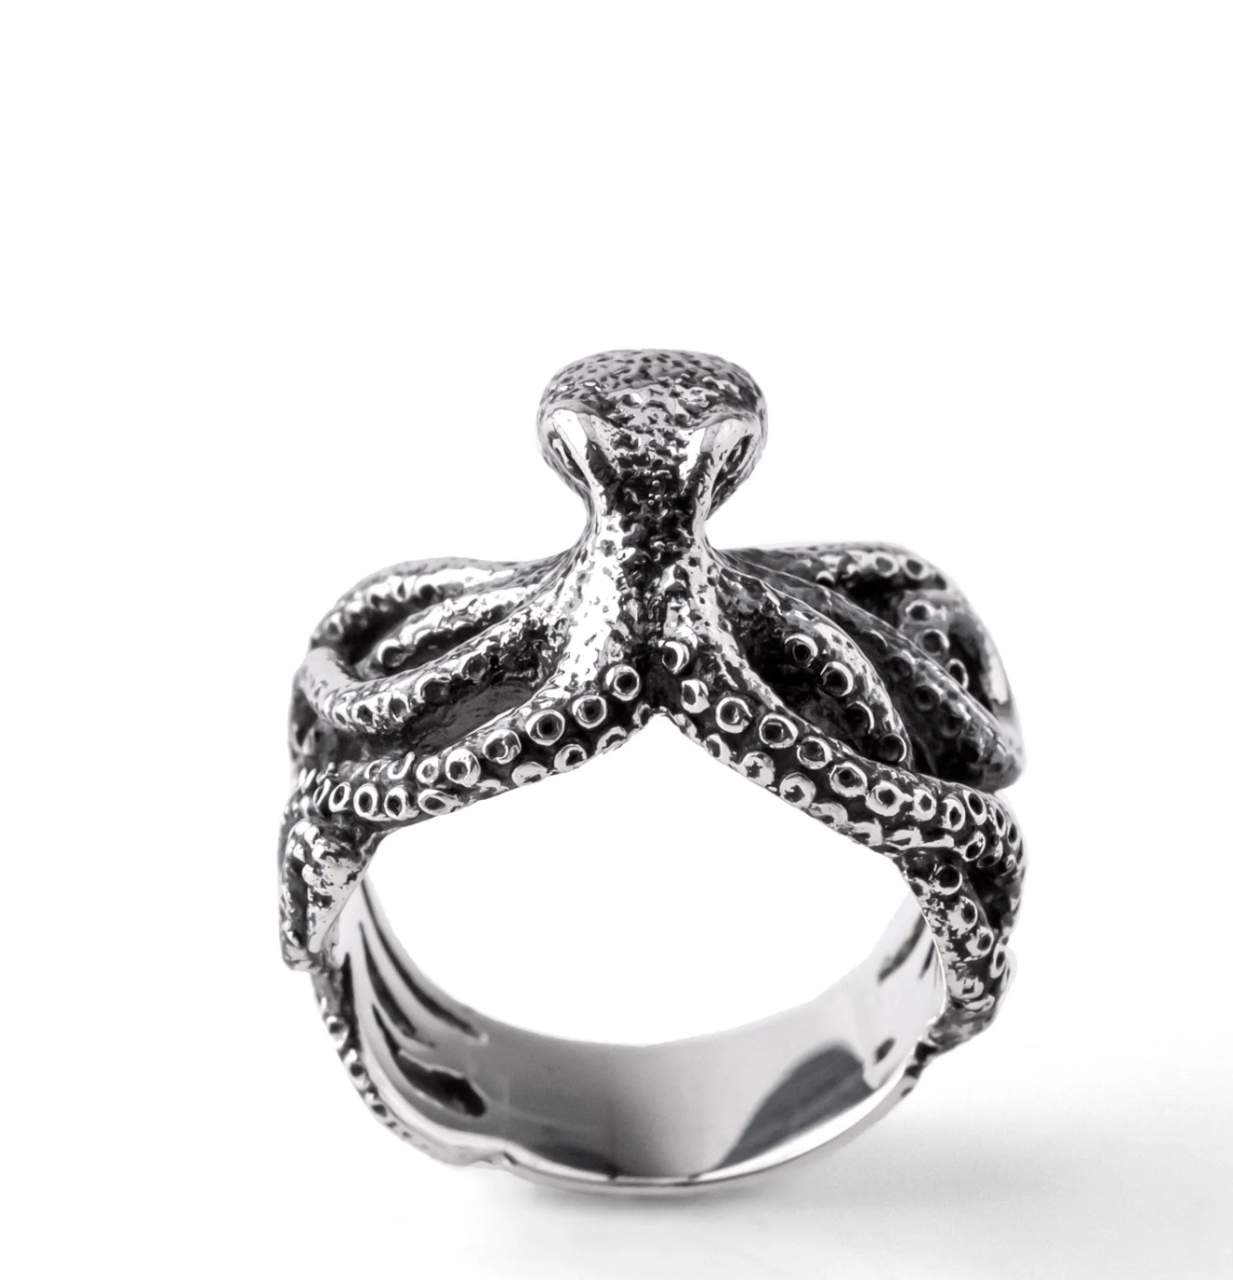 Nick Von K Octopus Ring Sterling Silver. Size R